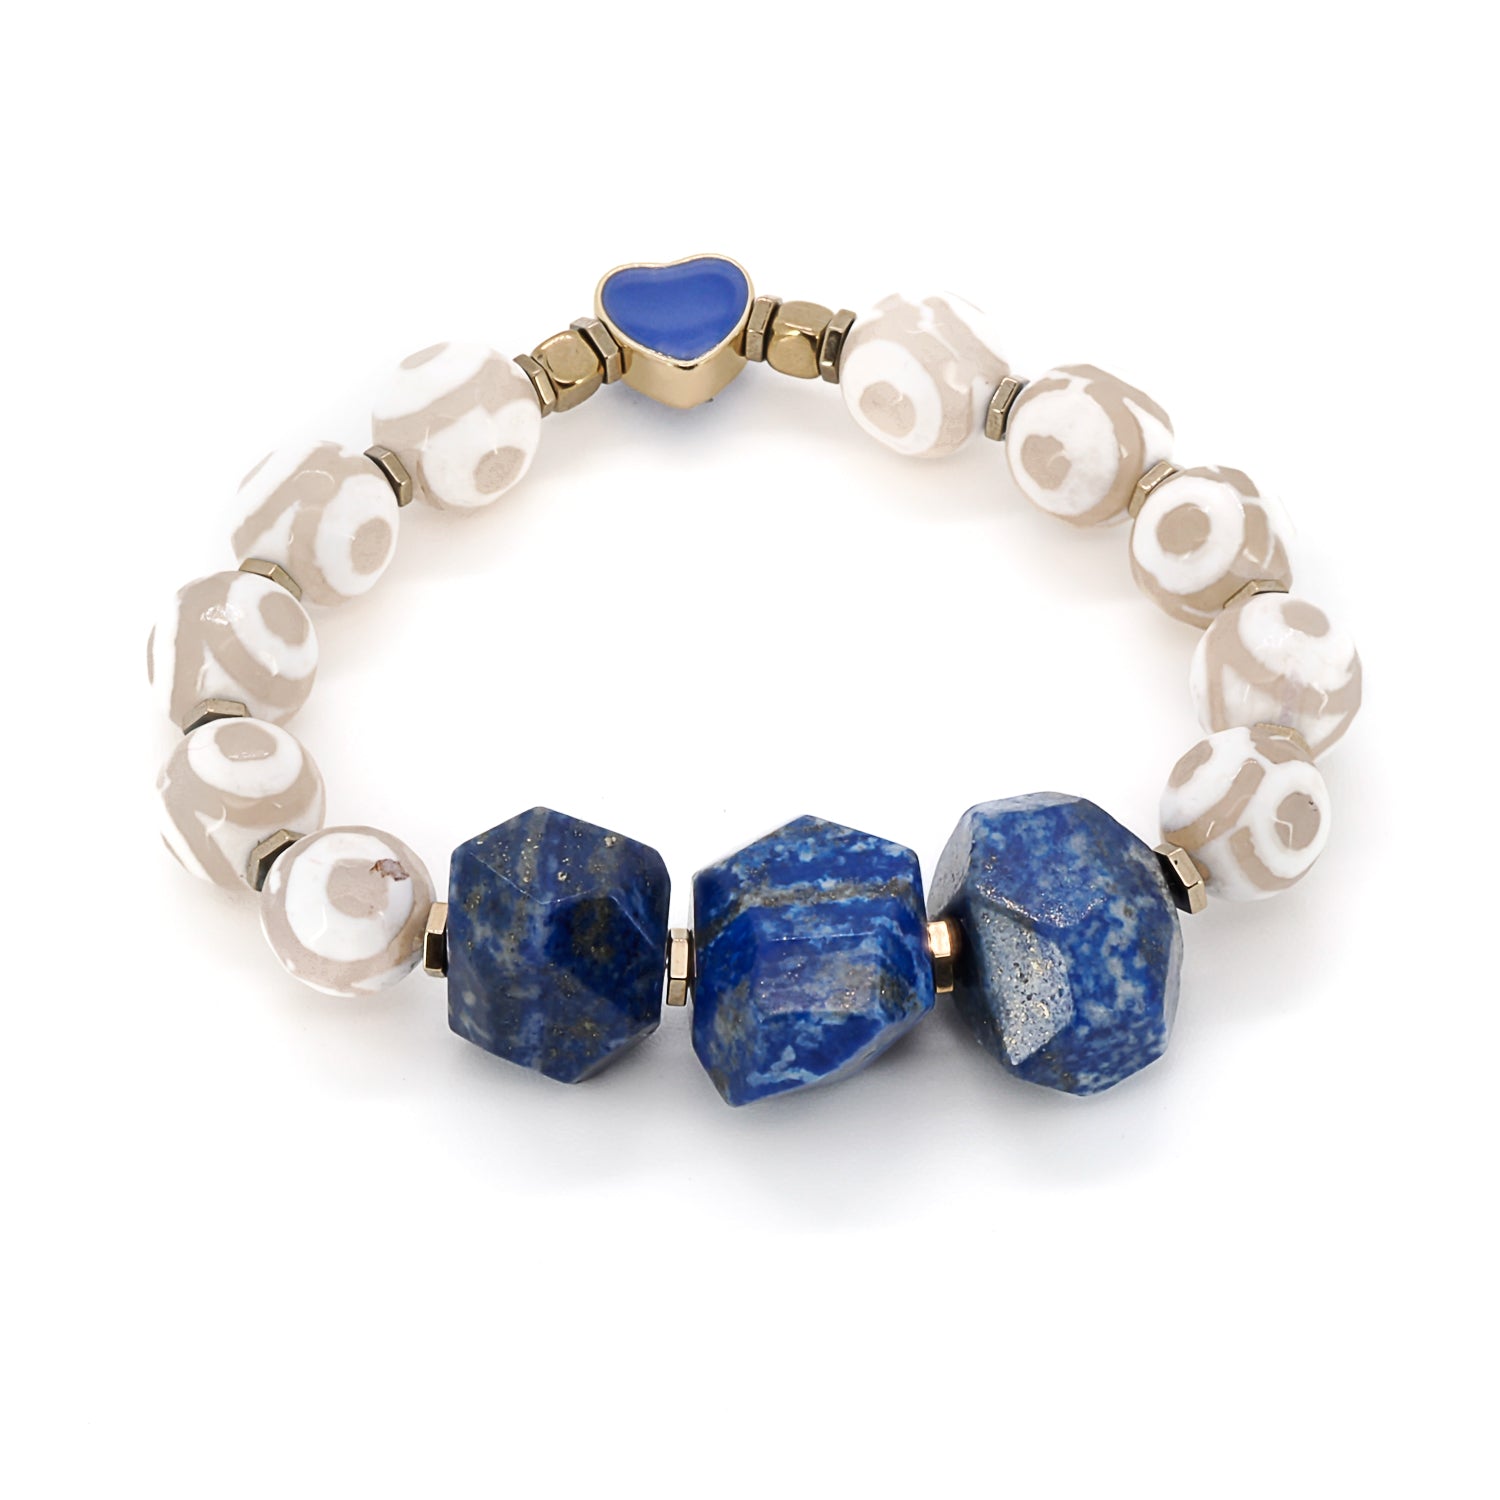 Eye of Love Lapis Lazuli Bracelet - Handmade jewelry with stunning Lapis Lazuli stone beads, promoting inner peace and self-awareness.